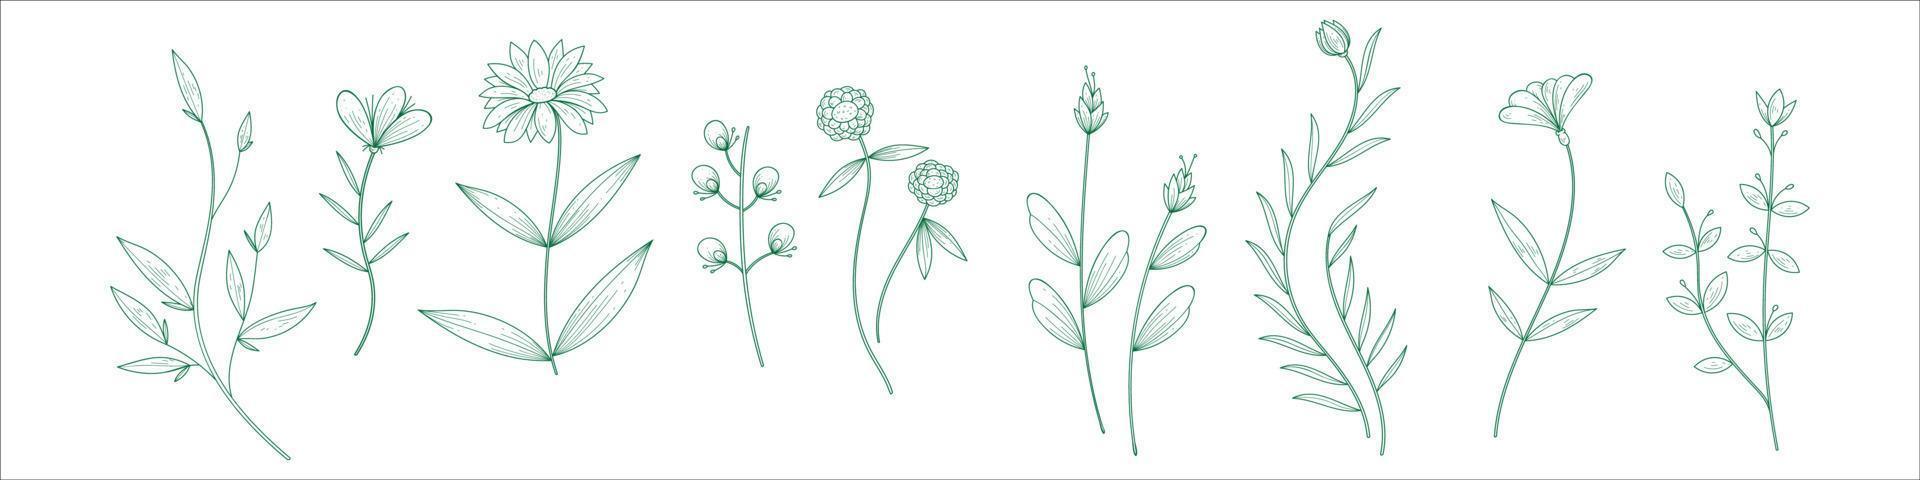 Hand drawn plants vector